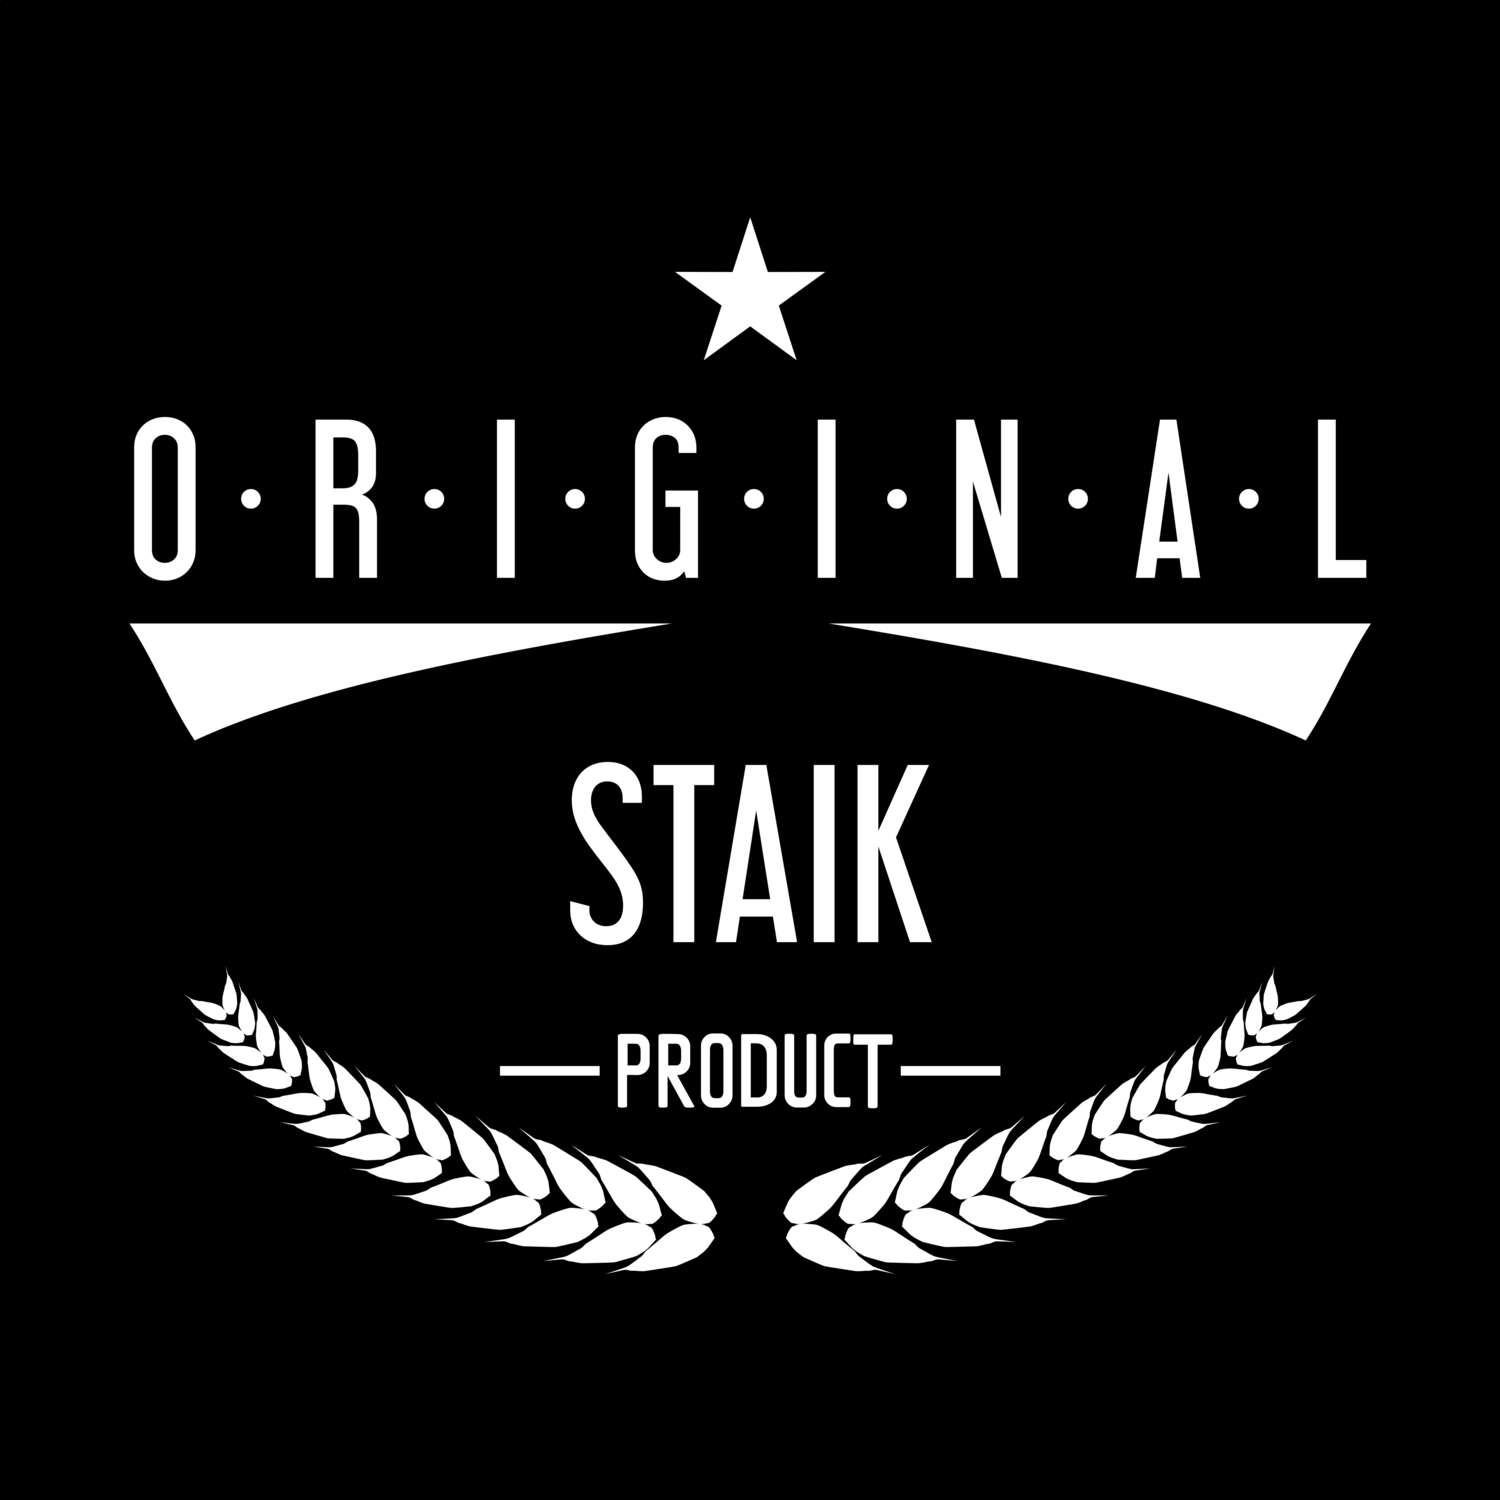 Staik T-Shirt »Original Product«